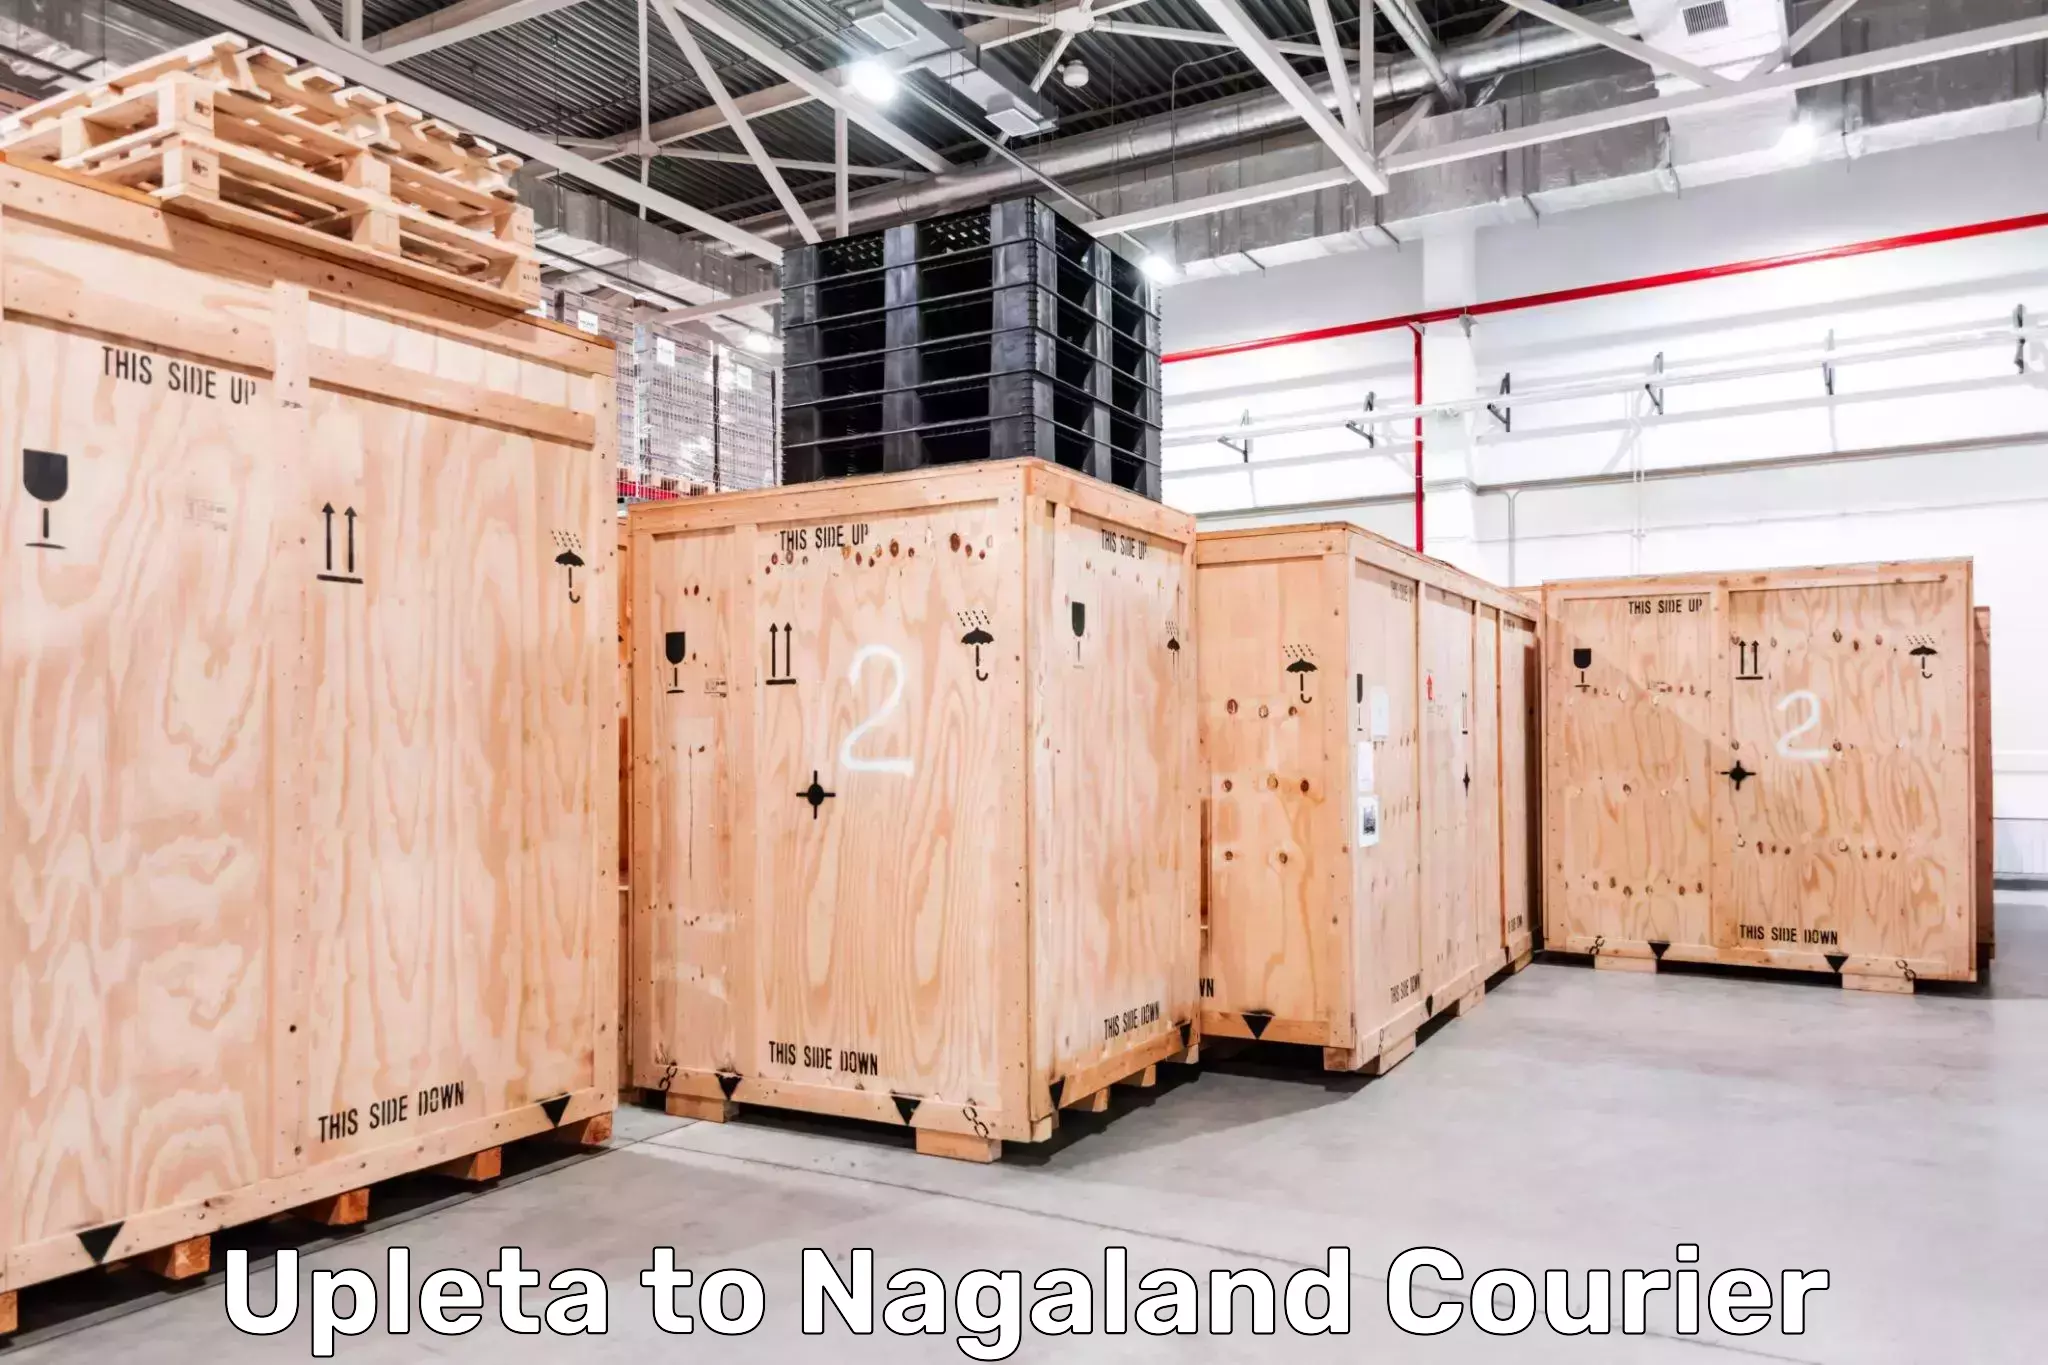 Cash on delivery service Upleta to Nagaland